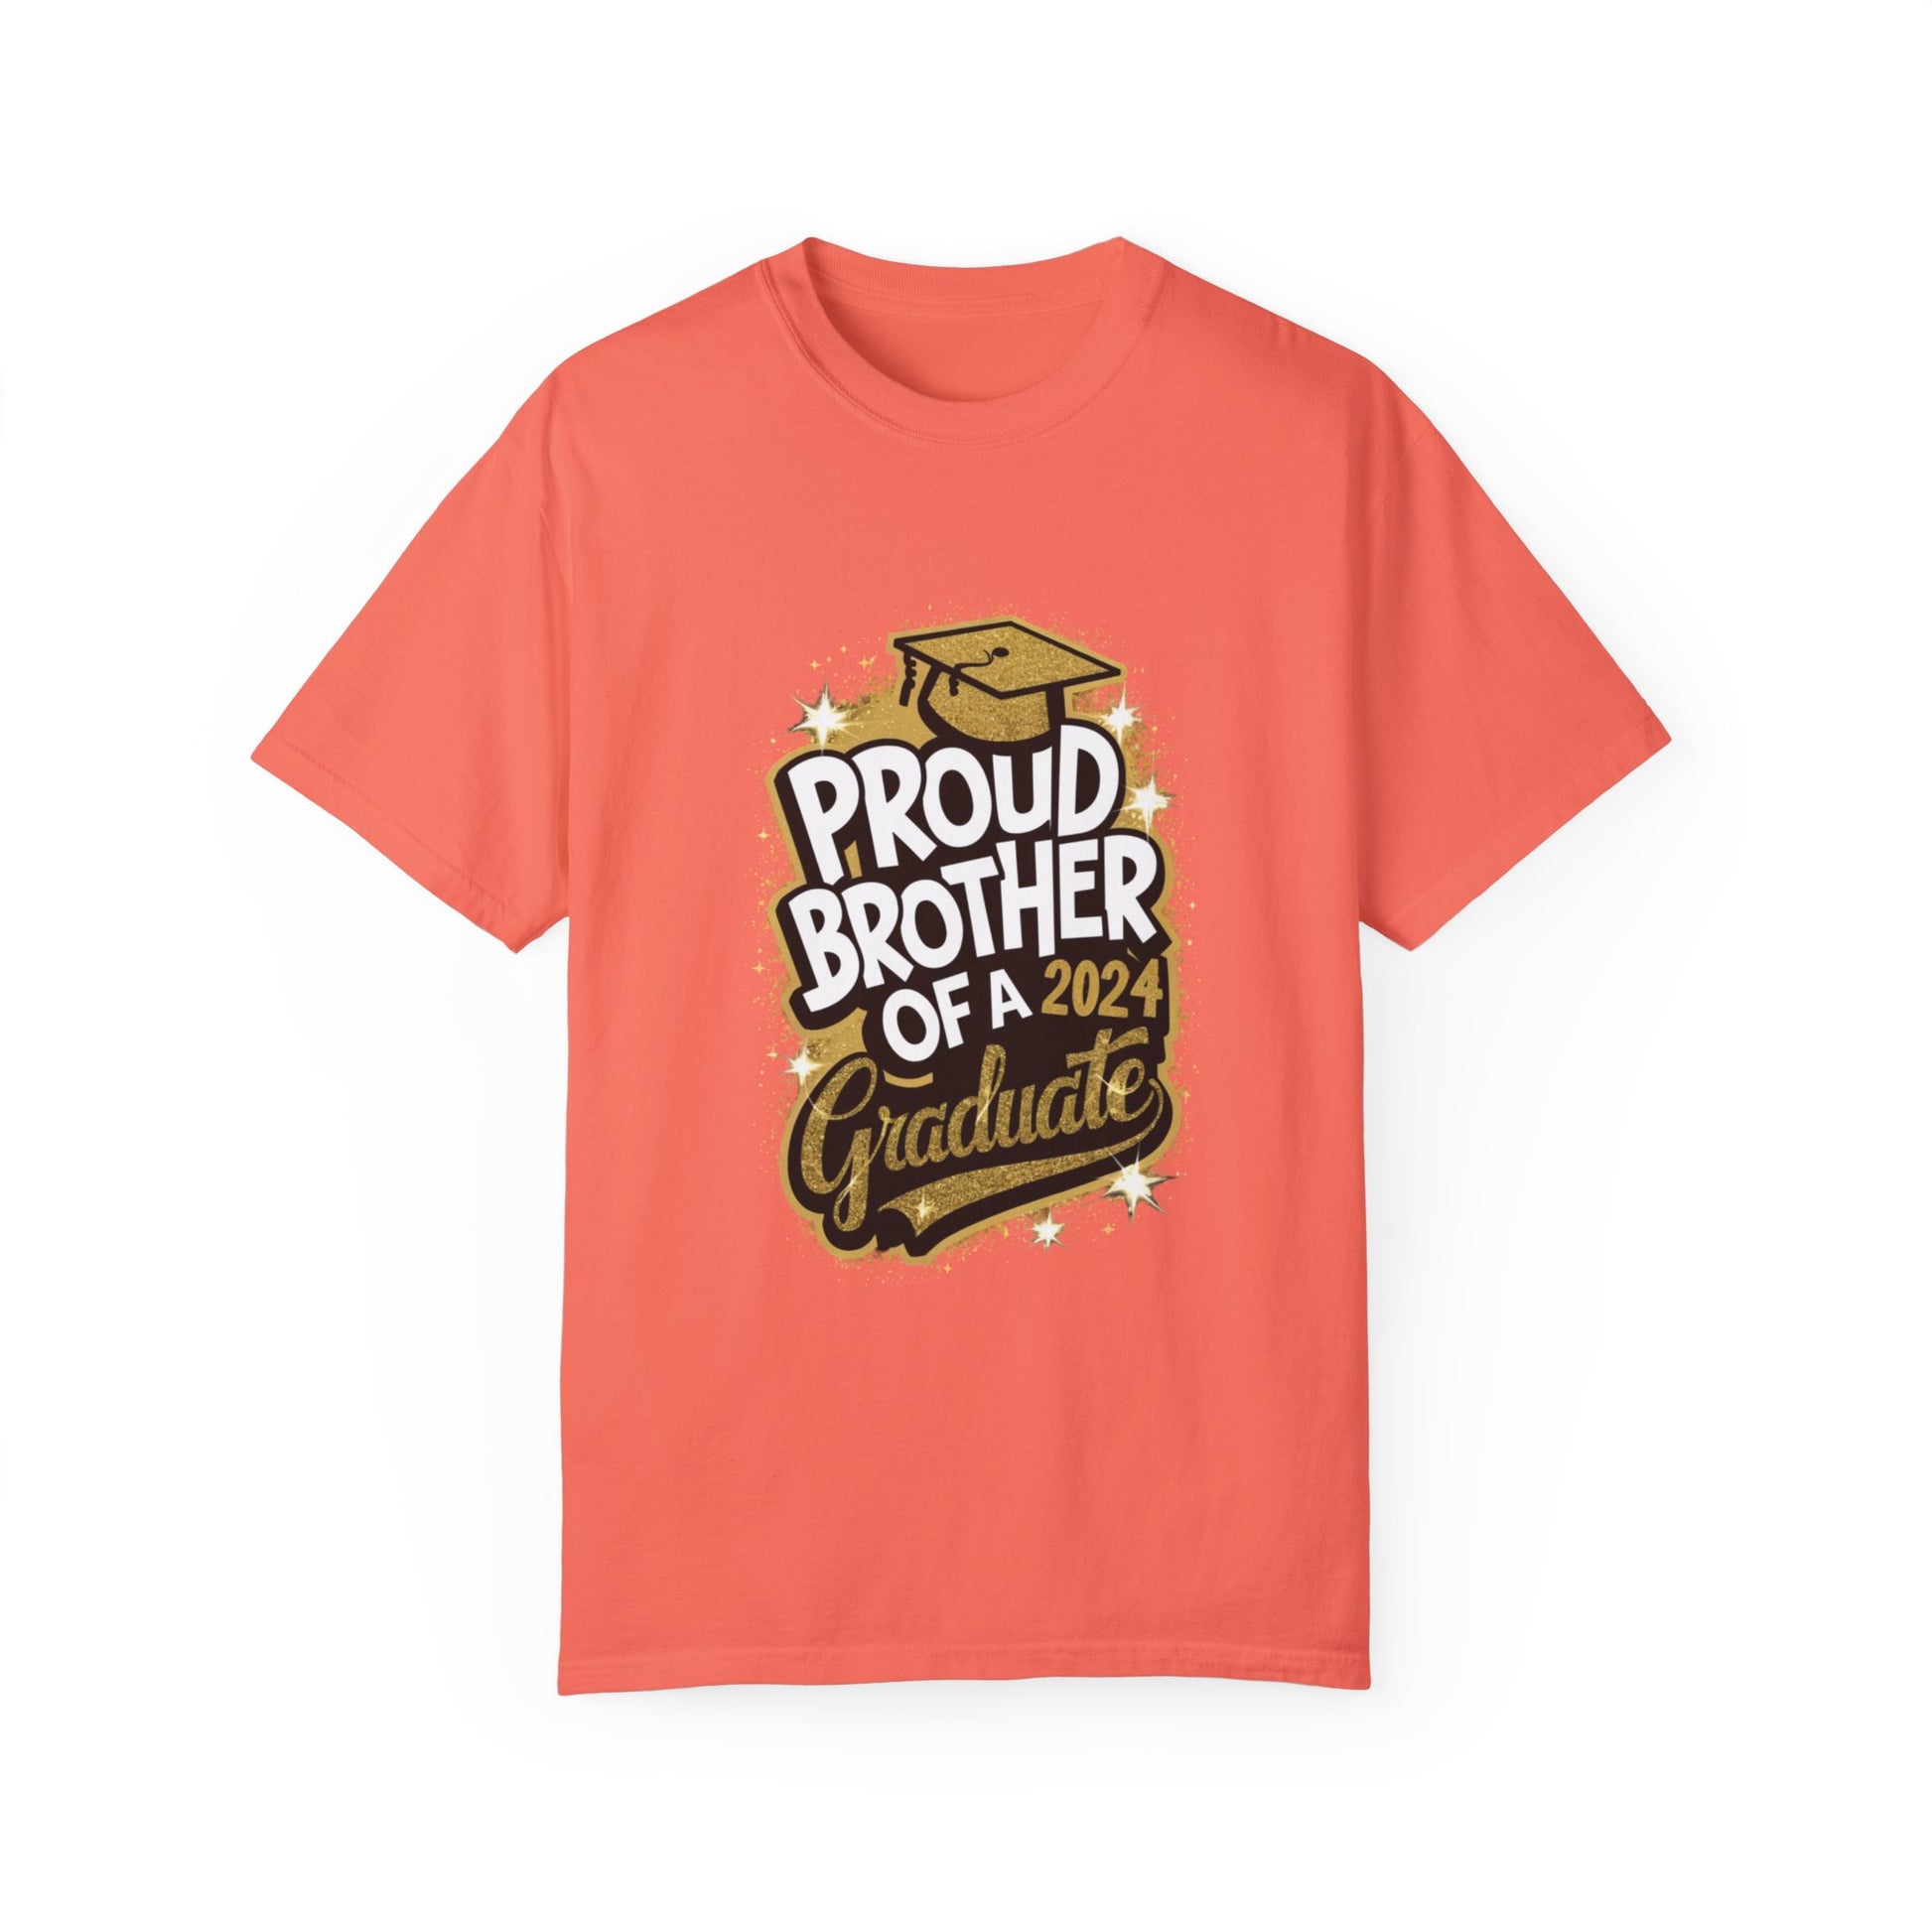 Proud Brother of a 2024 Graduate Unisex Garment-dyed T-shirt Cotton Funny Humorous Graphic Soft Premium Unisex Men Women Bright Salmon T-shirt Birthday Gift-6